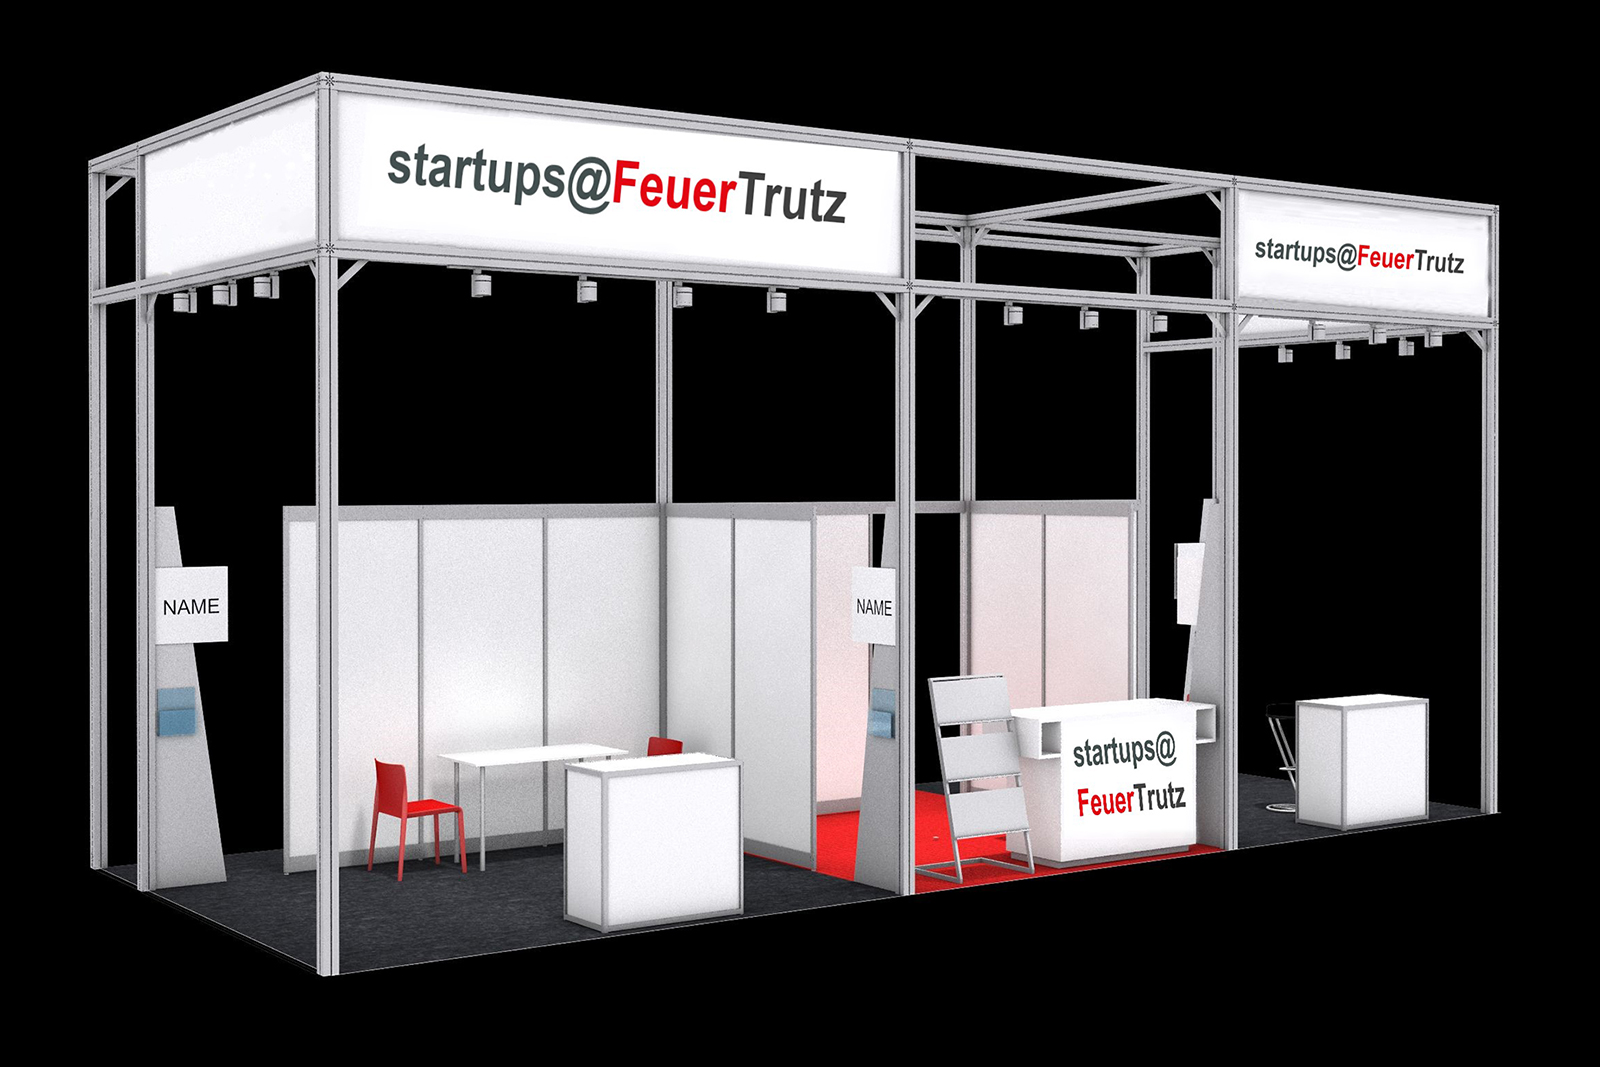 startups@FeuerTrutz